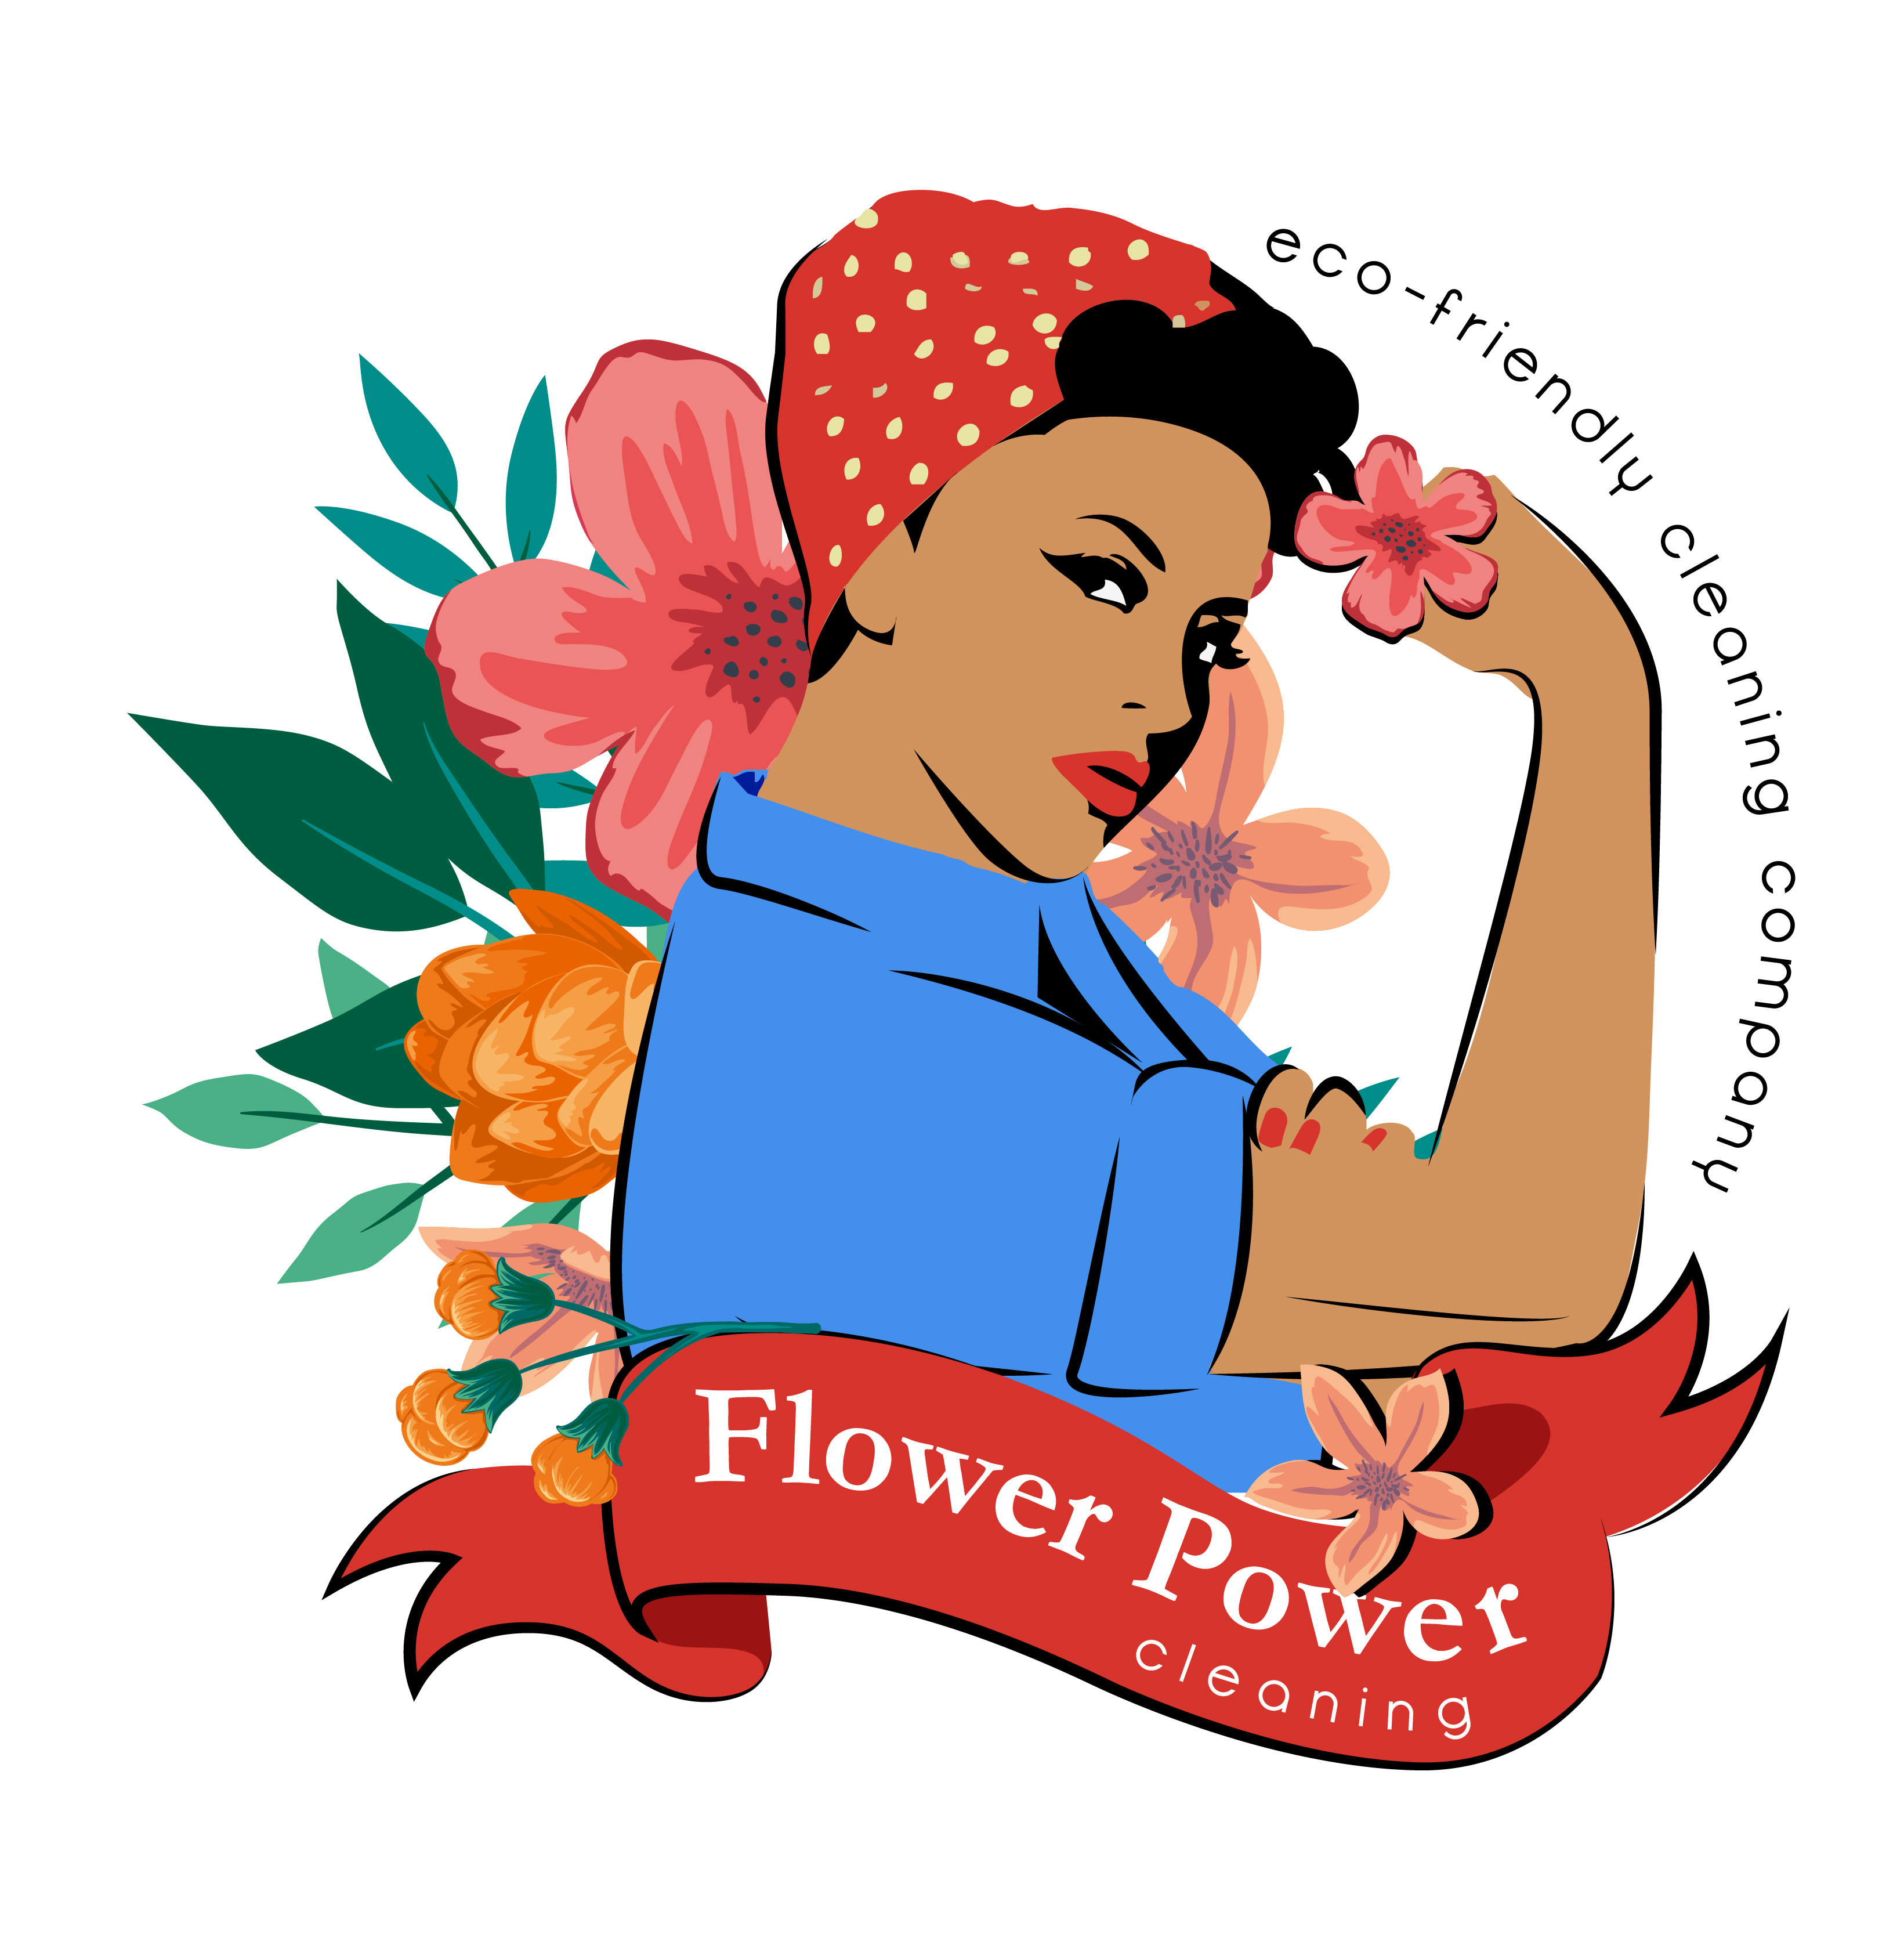 flowerpowercleaning | Flower Power Logo